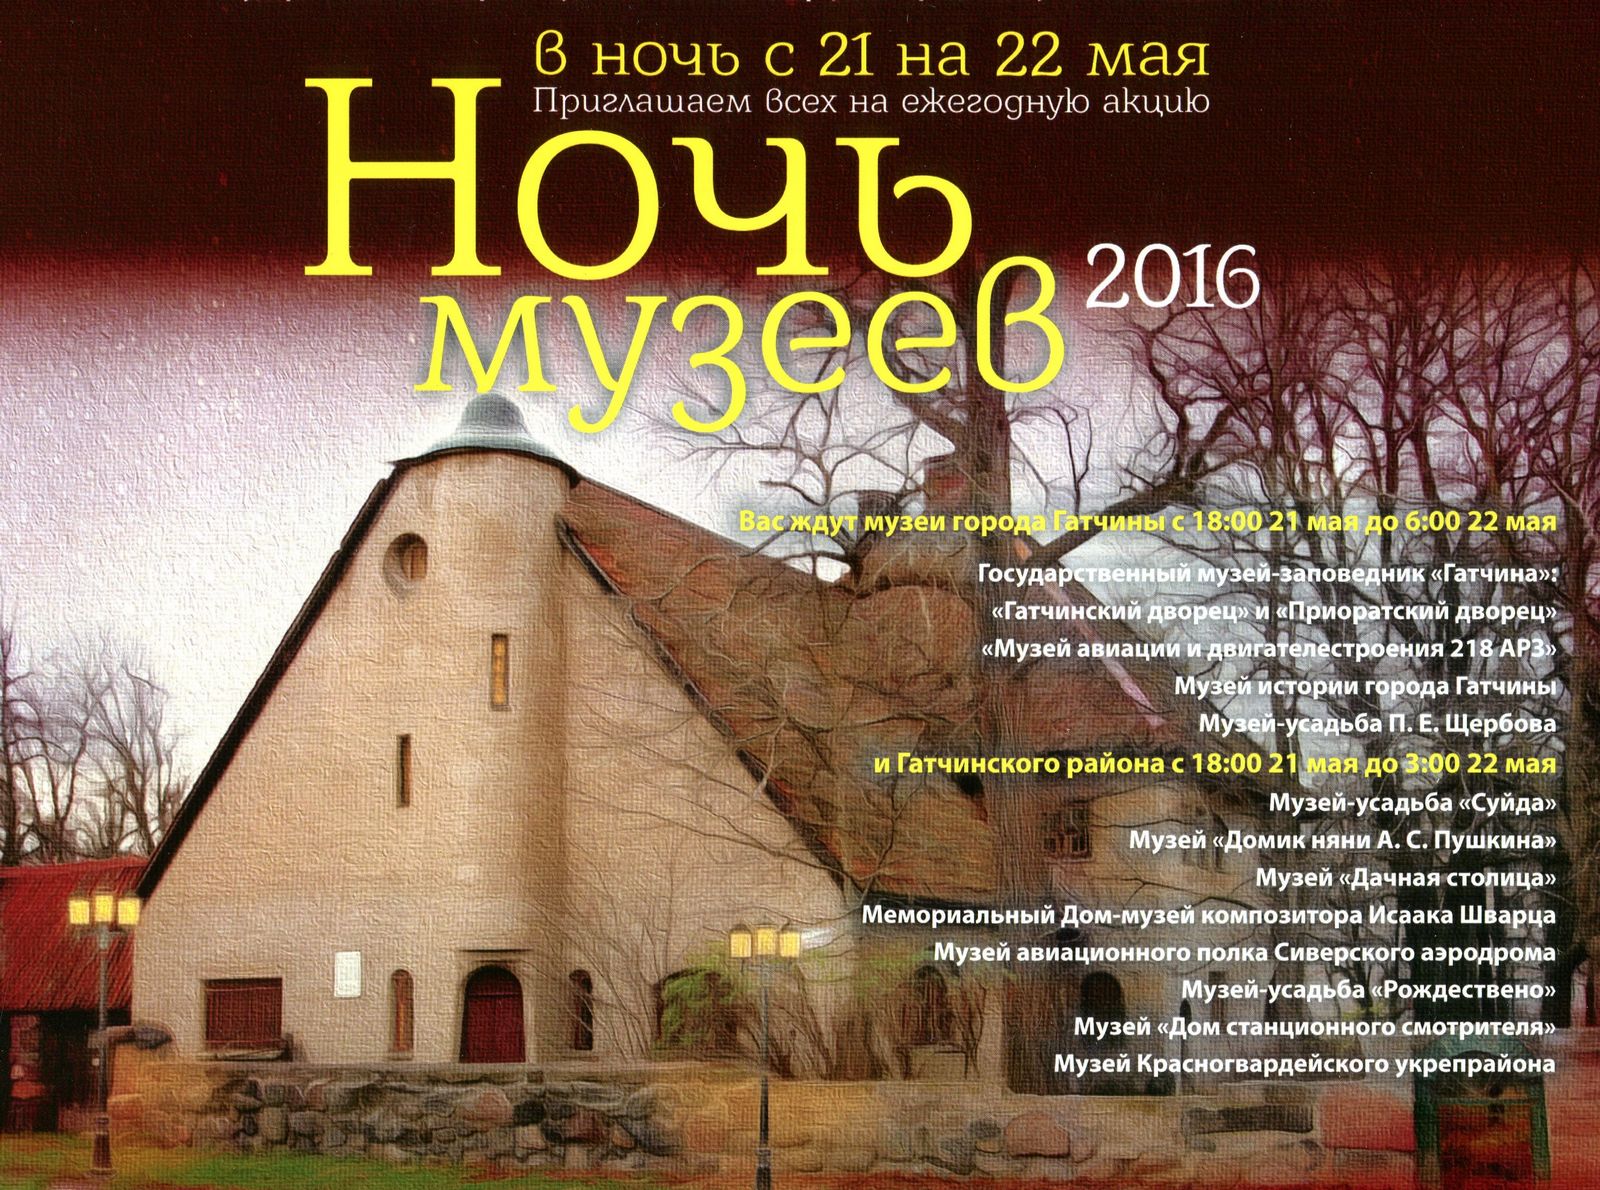 21 мая 2016 - ночь музеев
http://museum-schvarz.ru